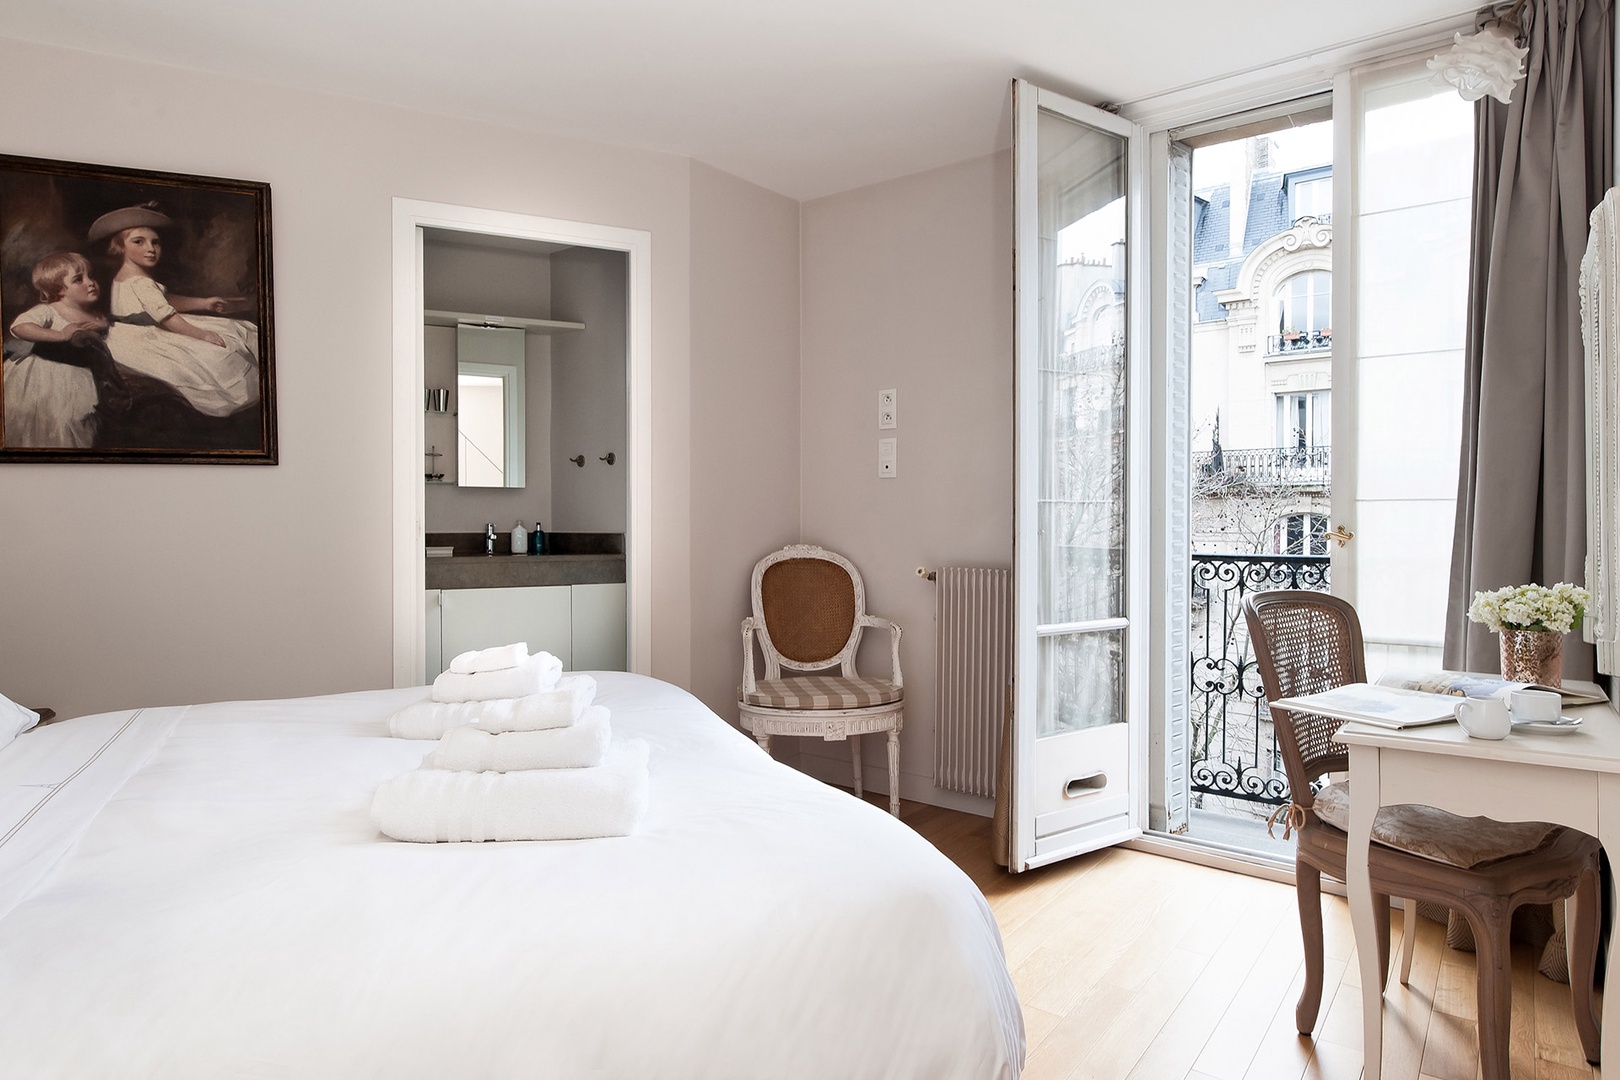 Bedroom 1 has an en suite bathroom, balcony and Eiffel Tower views!